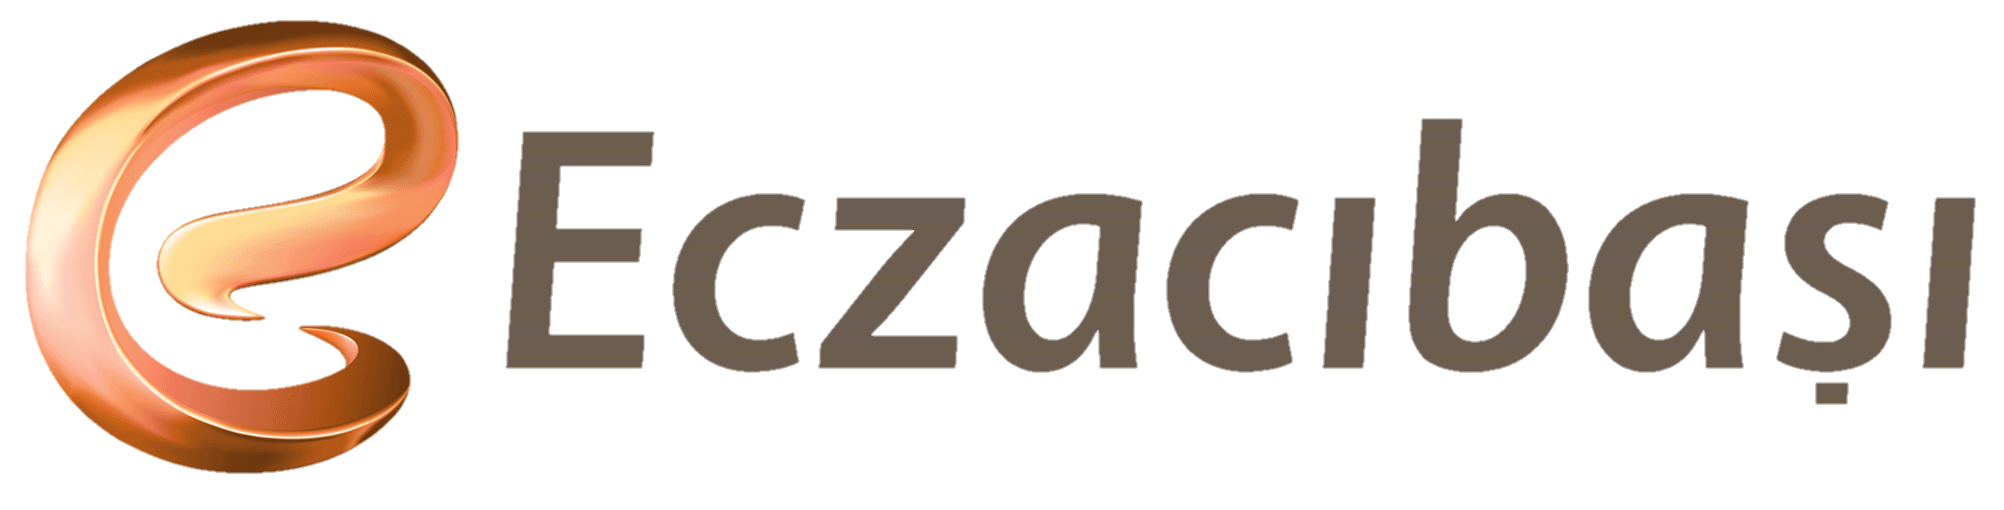 Eczacibasi Holding logosu.png